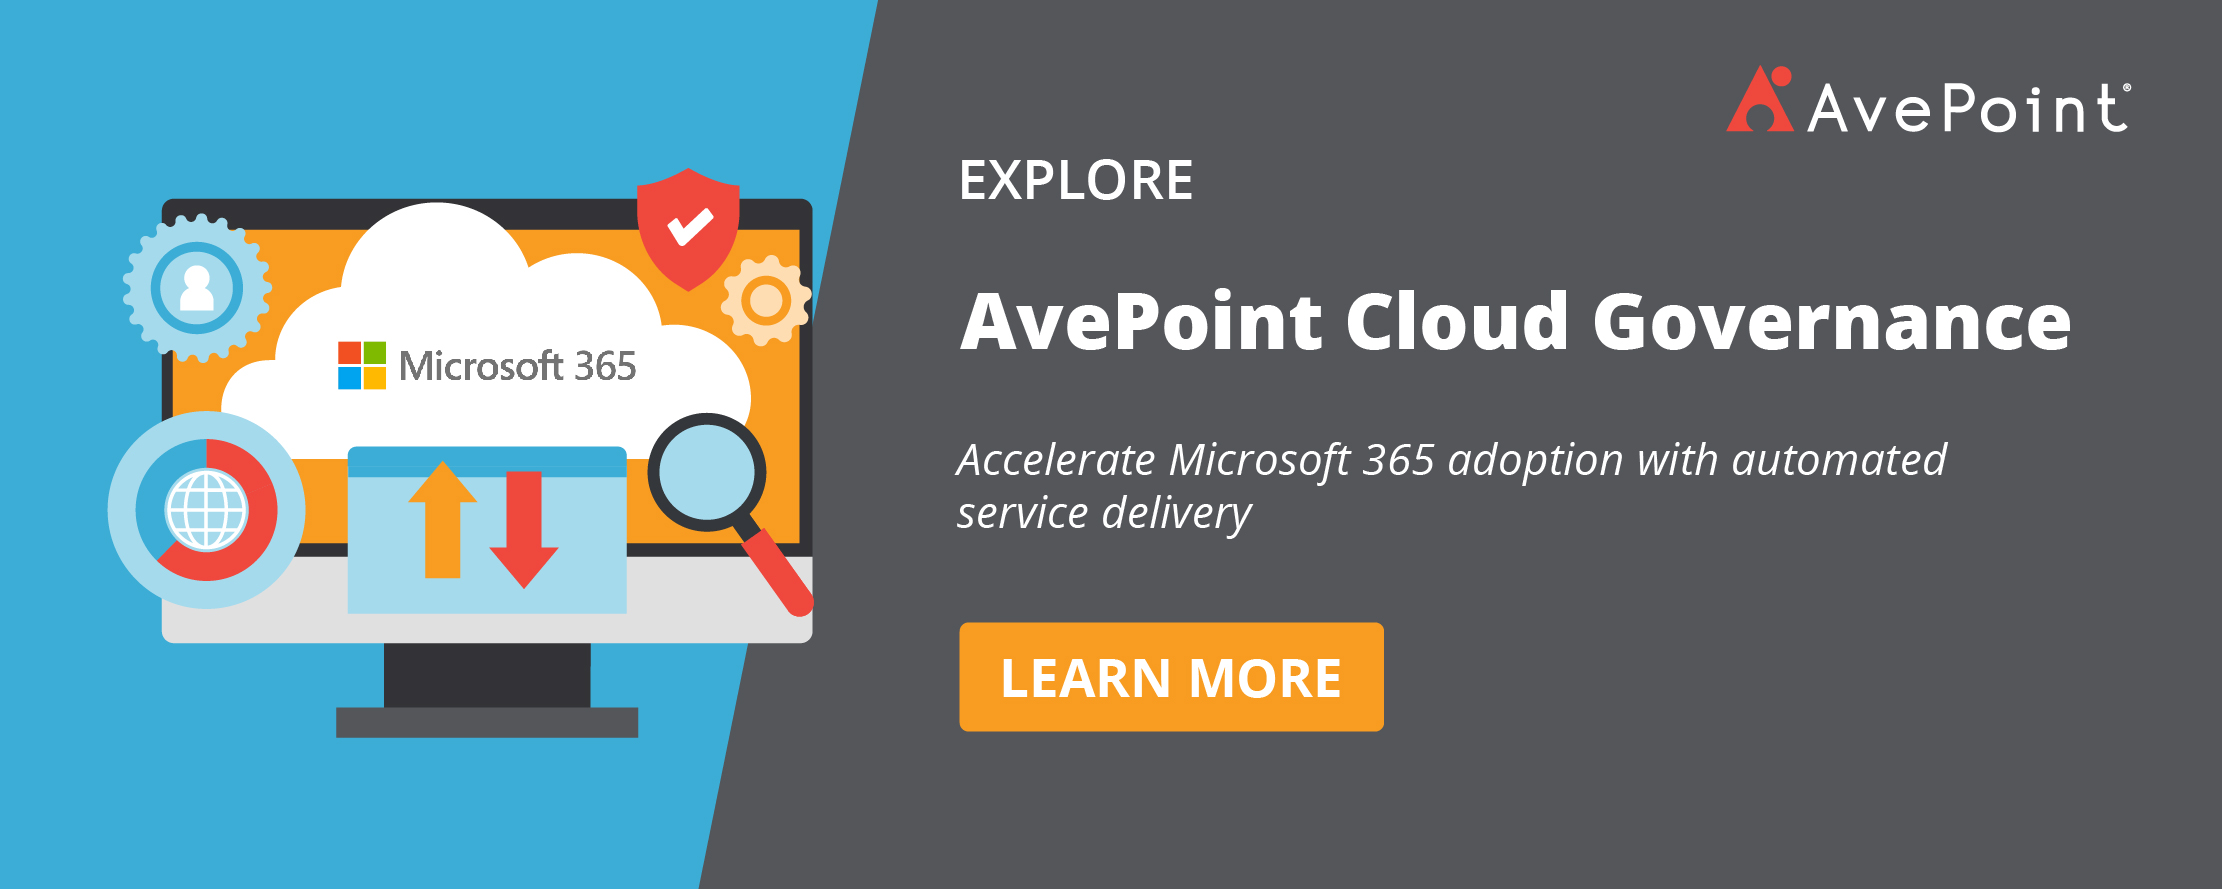 avepoint-cloud-governance